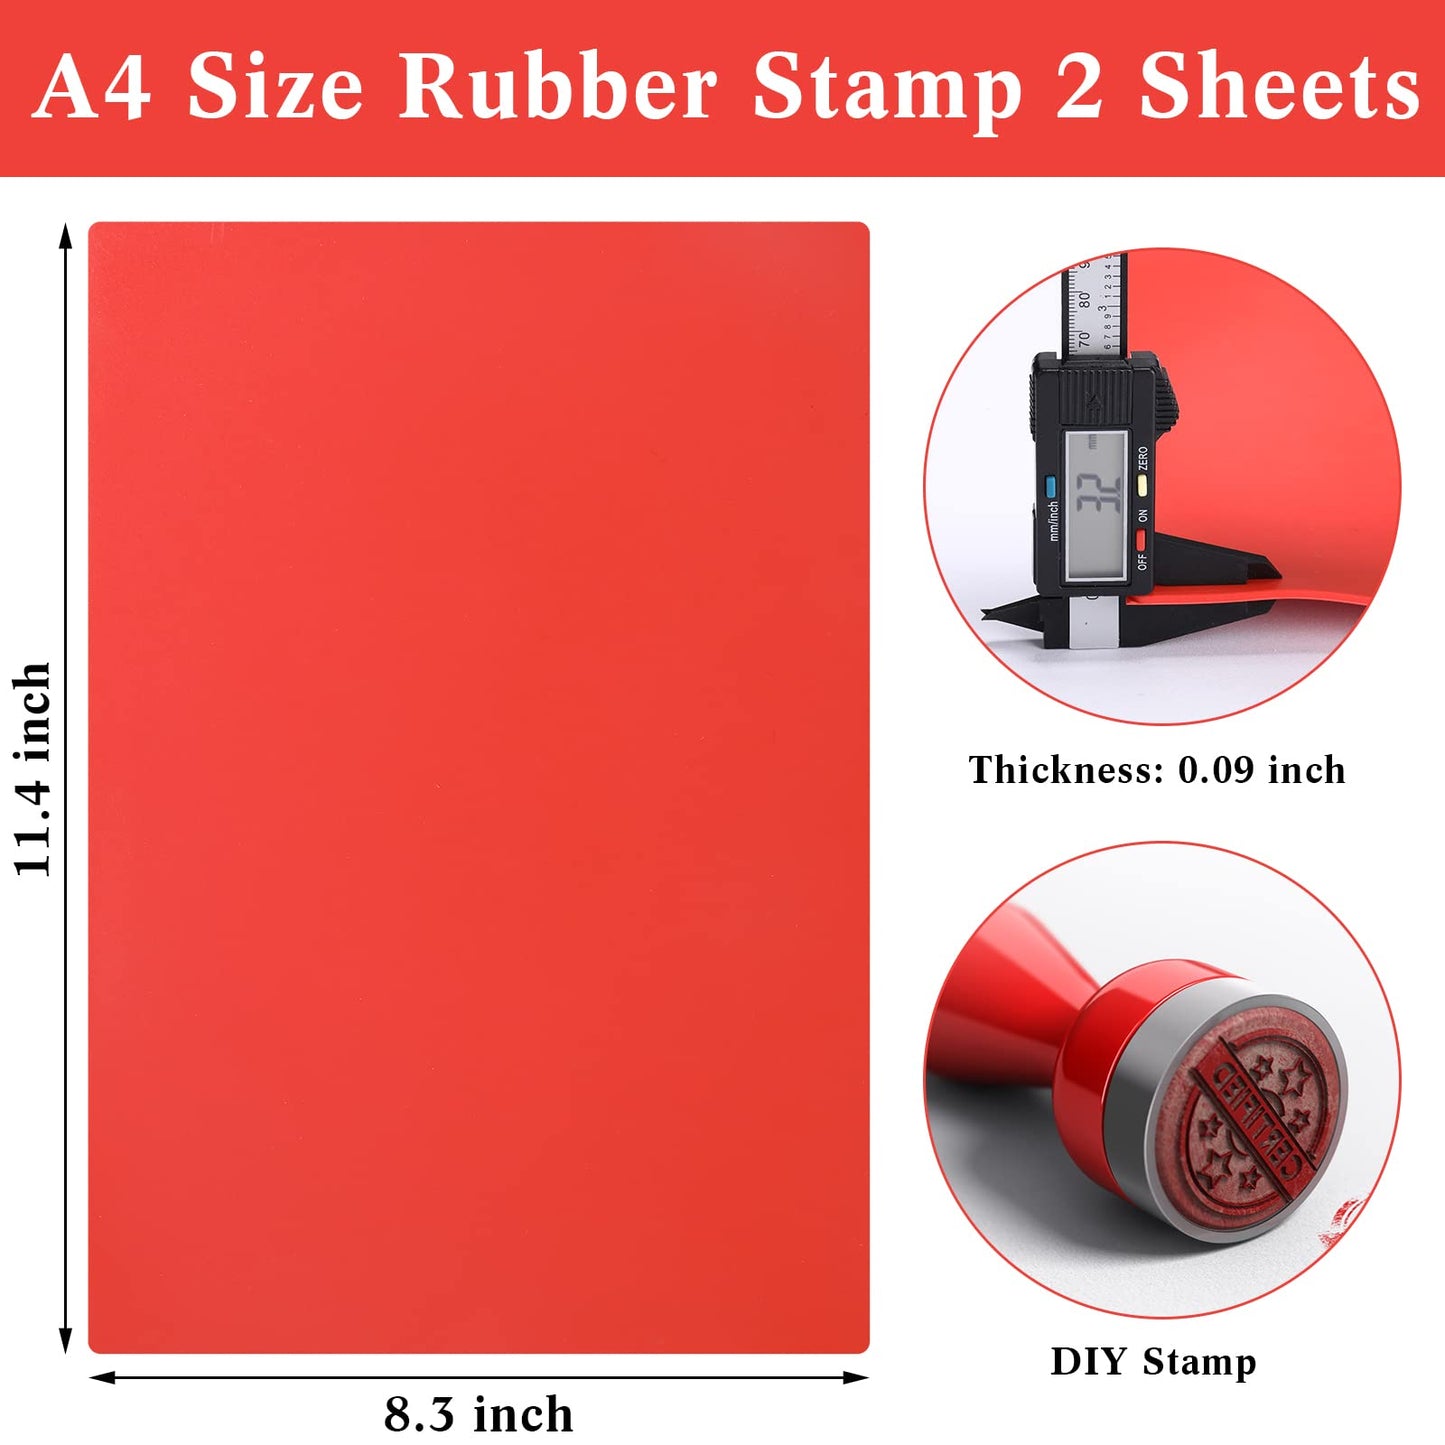 2 Sheets Rubber Stamp Sheets for Laser Engraving Machine, A4 Rubber Stamp Sheets for Laser Cutter Soft Rubber Sheets to Make Rubber Stamps, 2.3 mm